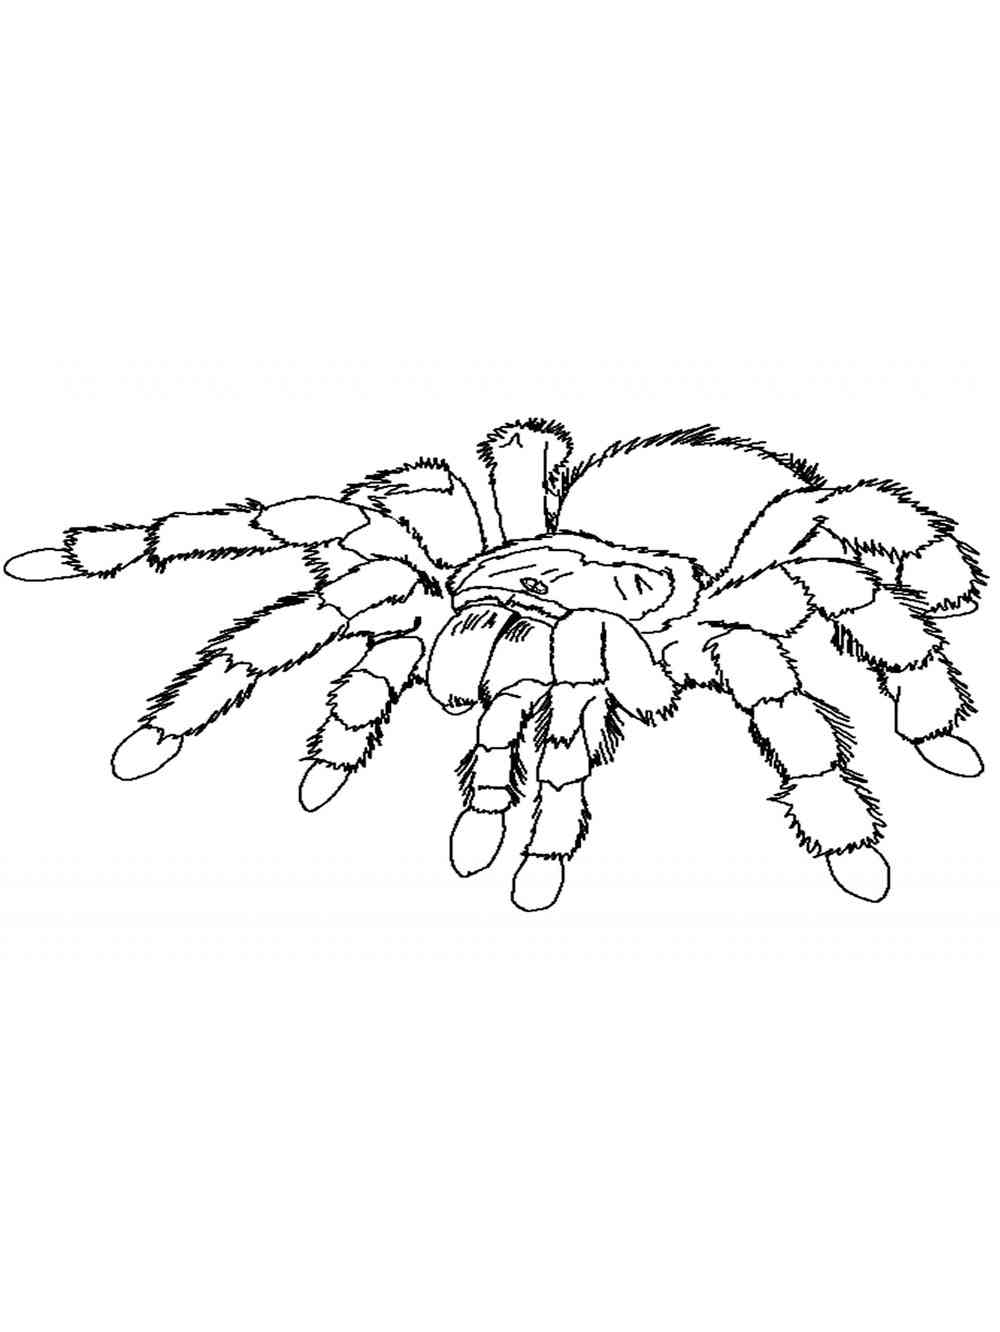 Tarantula Spider coloring page